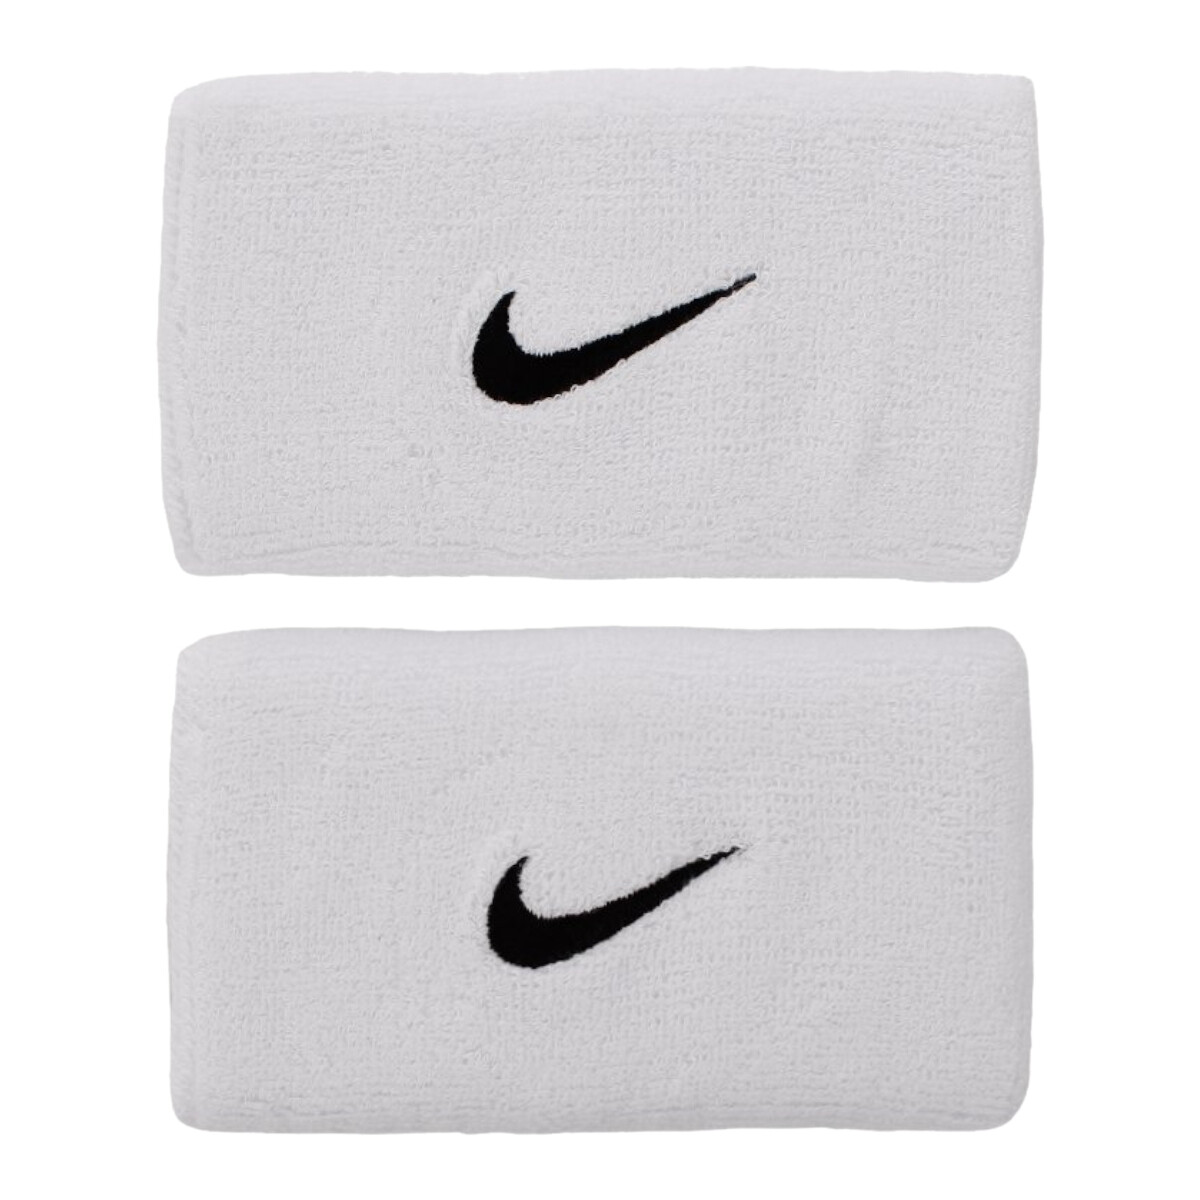 Accesorios Complemento para deporte Nike Swoosh Doublewide Wristbands Blanco